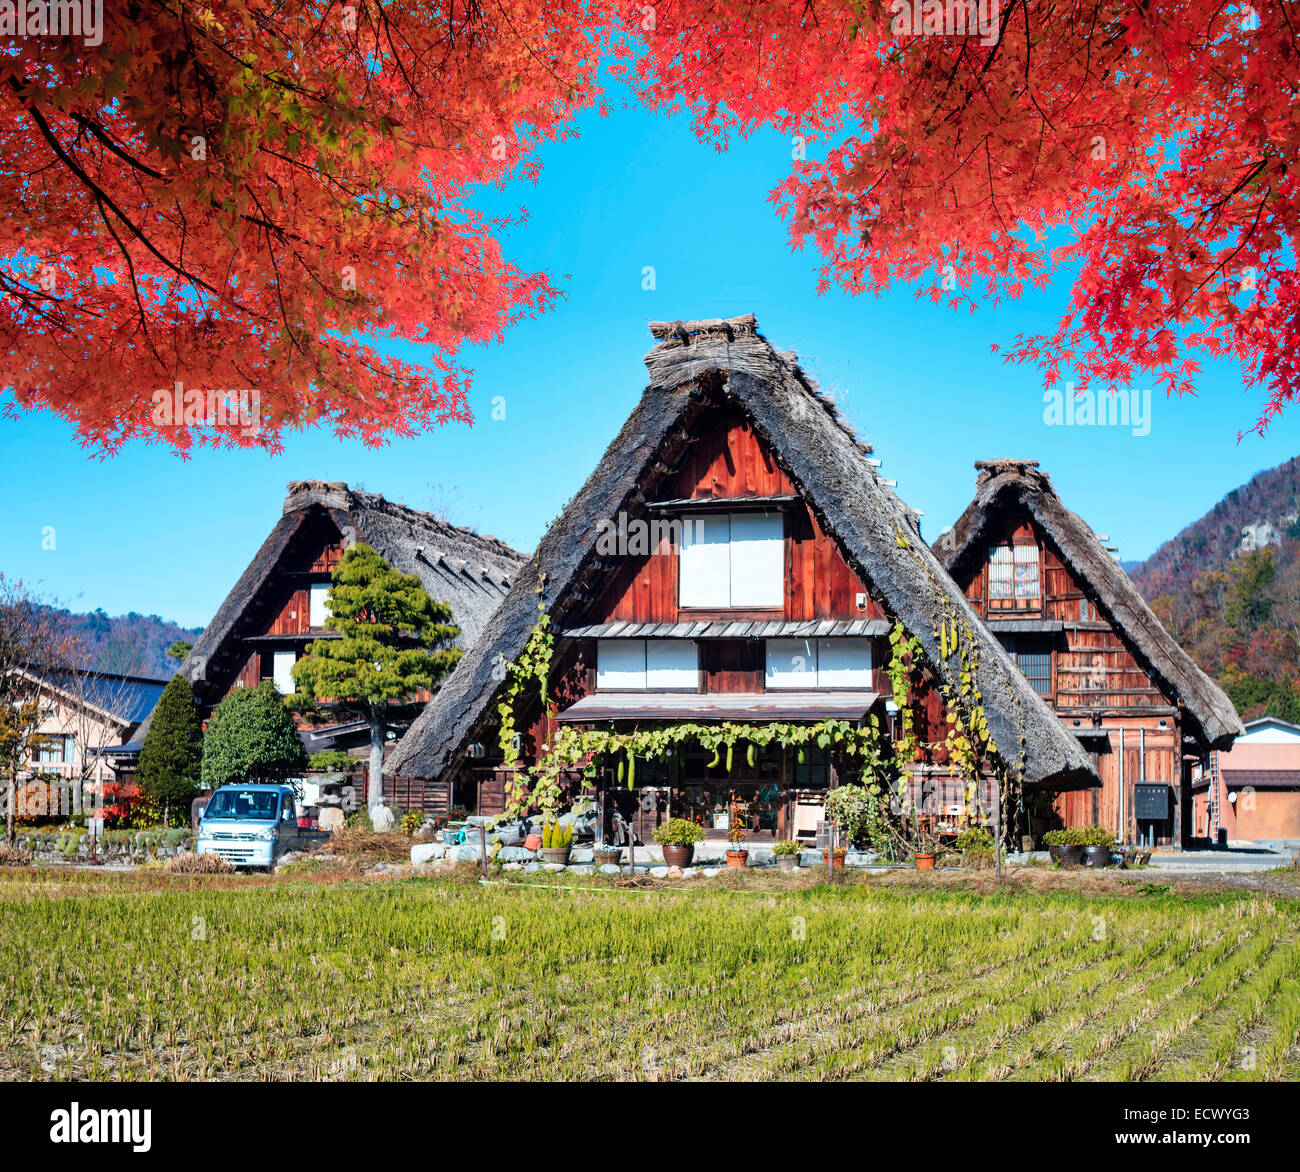 Image of the Historic Villages of Shirakawa-gand Gokayama for adv or others purpose use Stock Photo